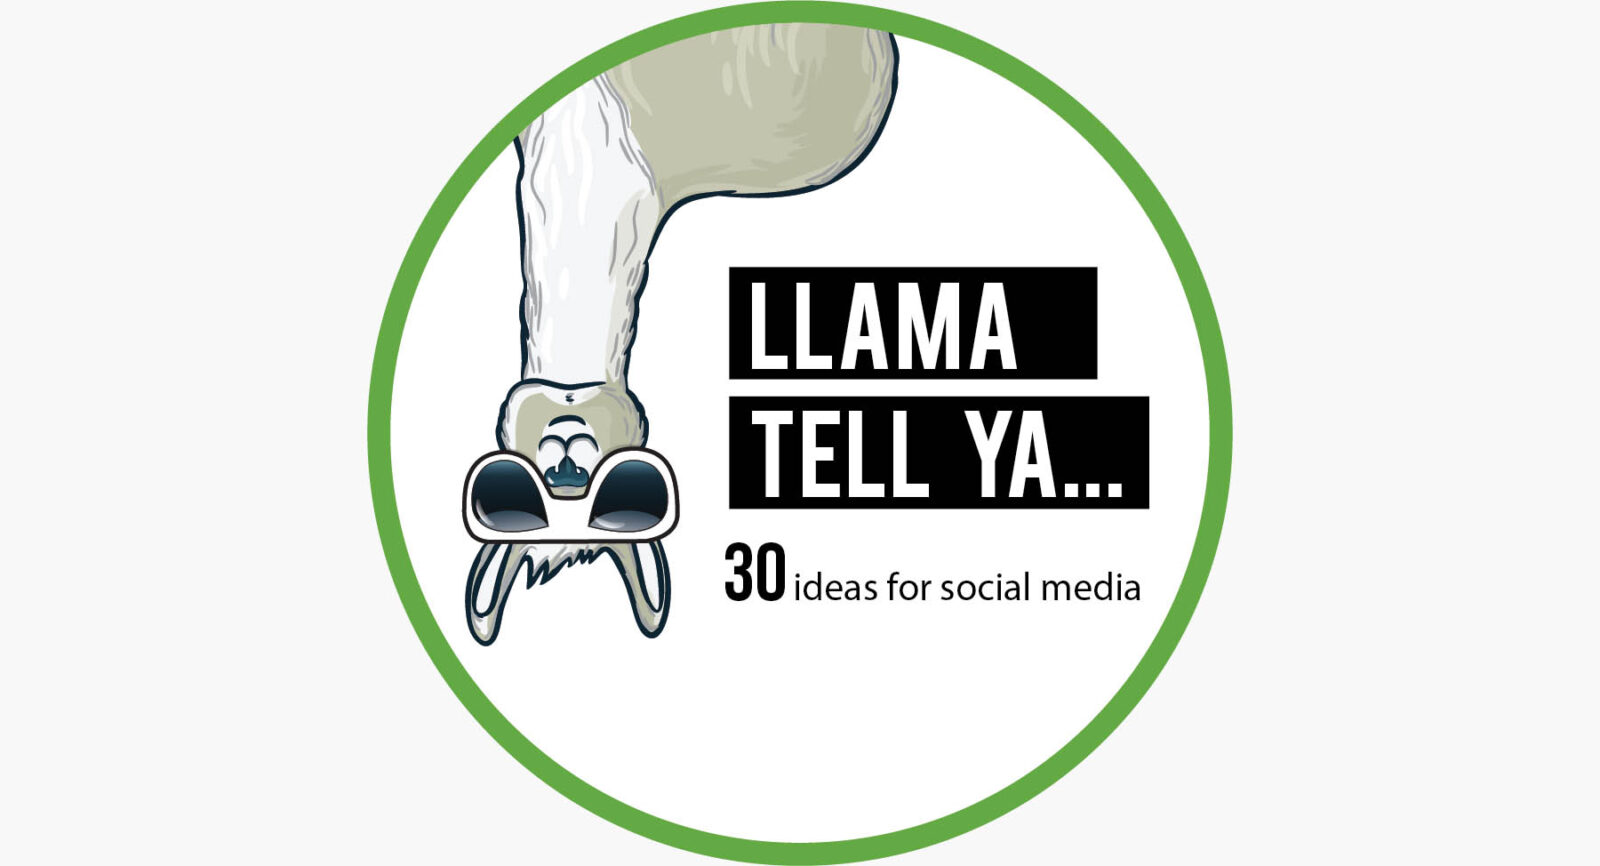 "Llama tell ya... 30 ideas for social media" upside down llama badge